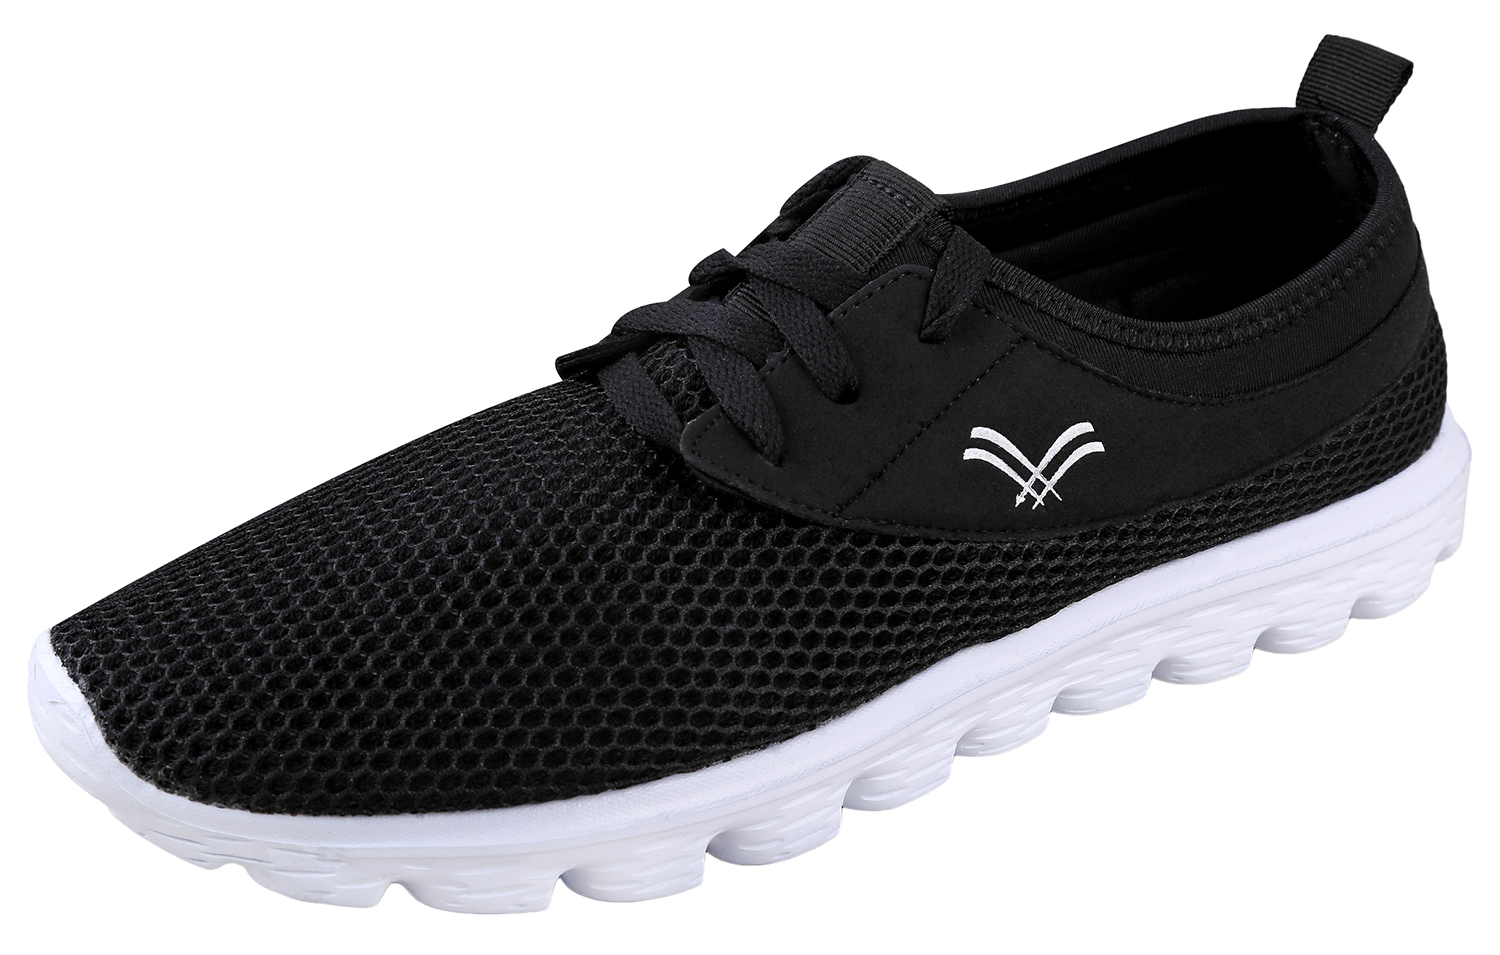 Urban Fox Men's Breeze Lightweight Shoes | Lightweight Shoes for Men | Casual Shoes | Walking Shoes for Men | Black/White 9 M US - image 1 of 7